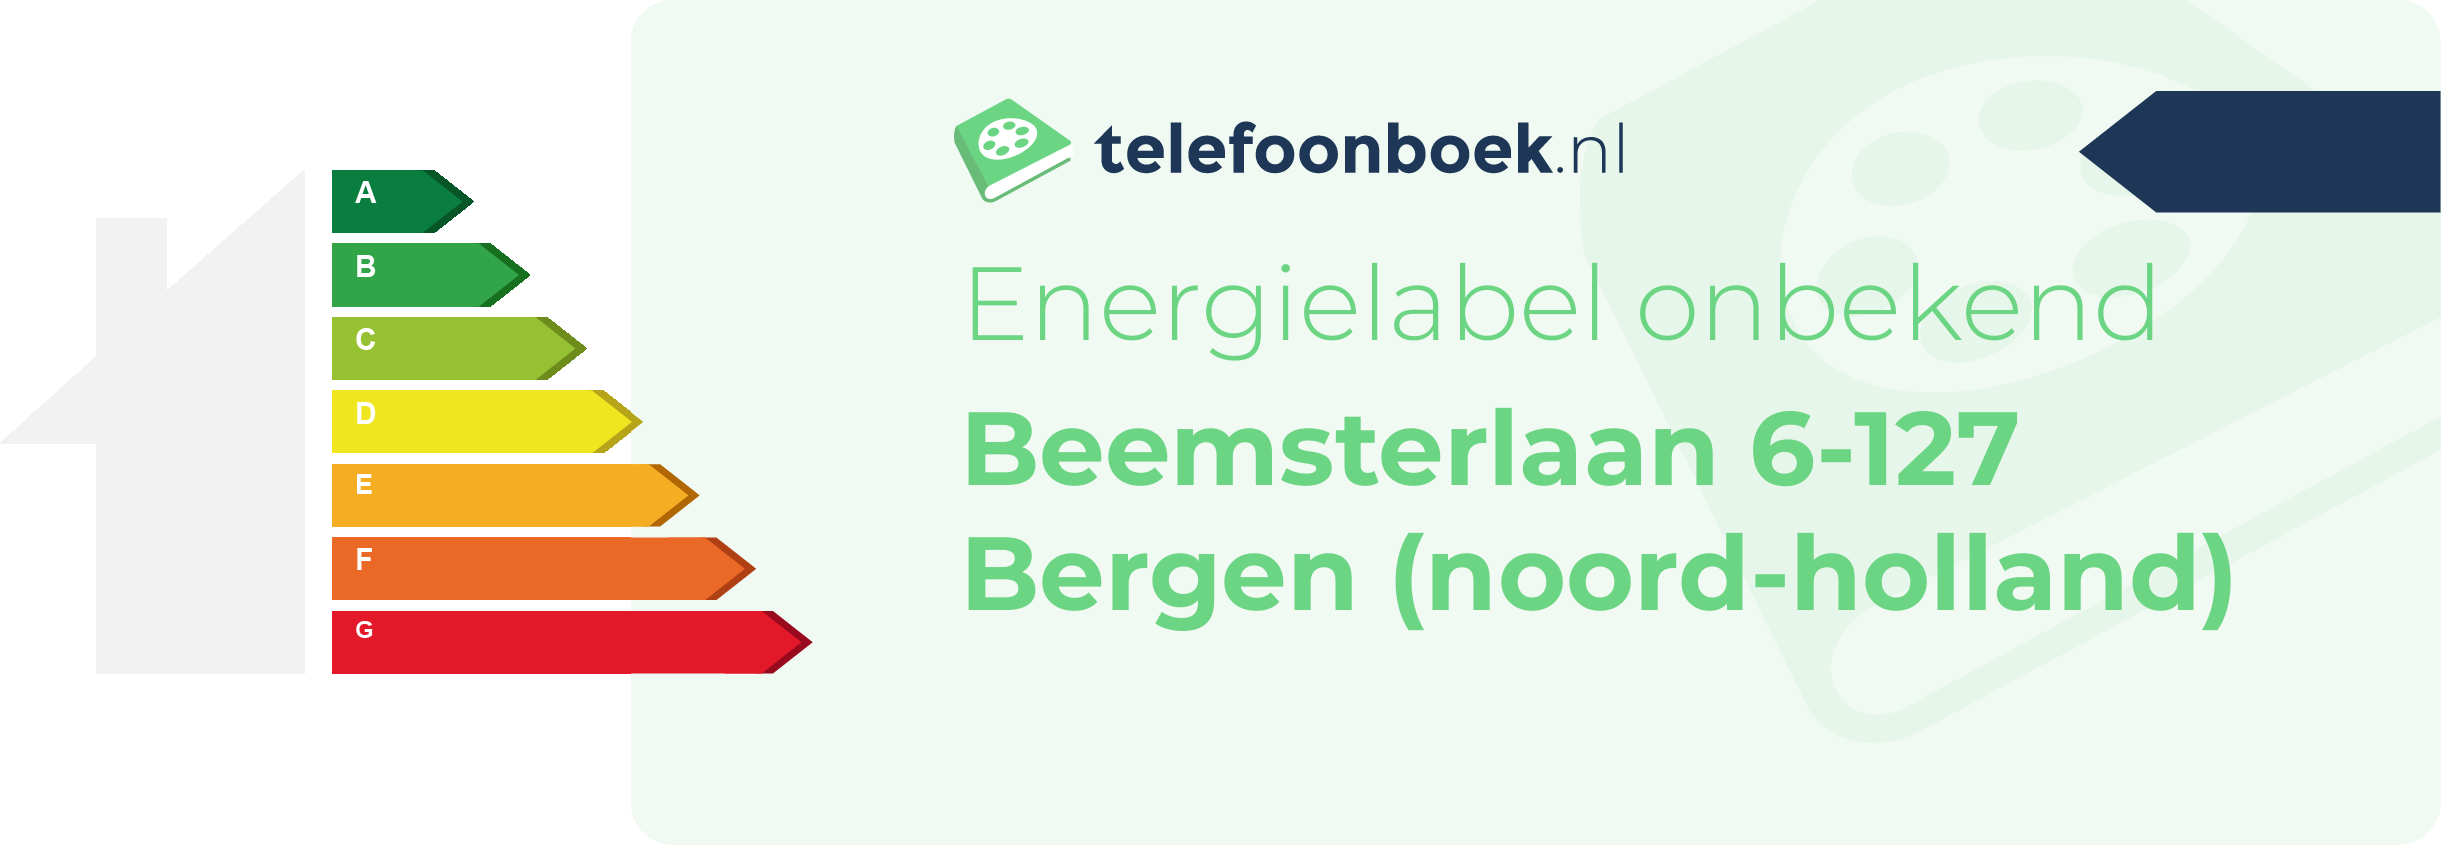 Energielabel Beemsterlaan 6-127 Bergen (Noord-Holland)